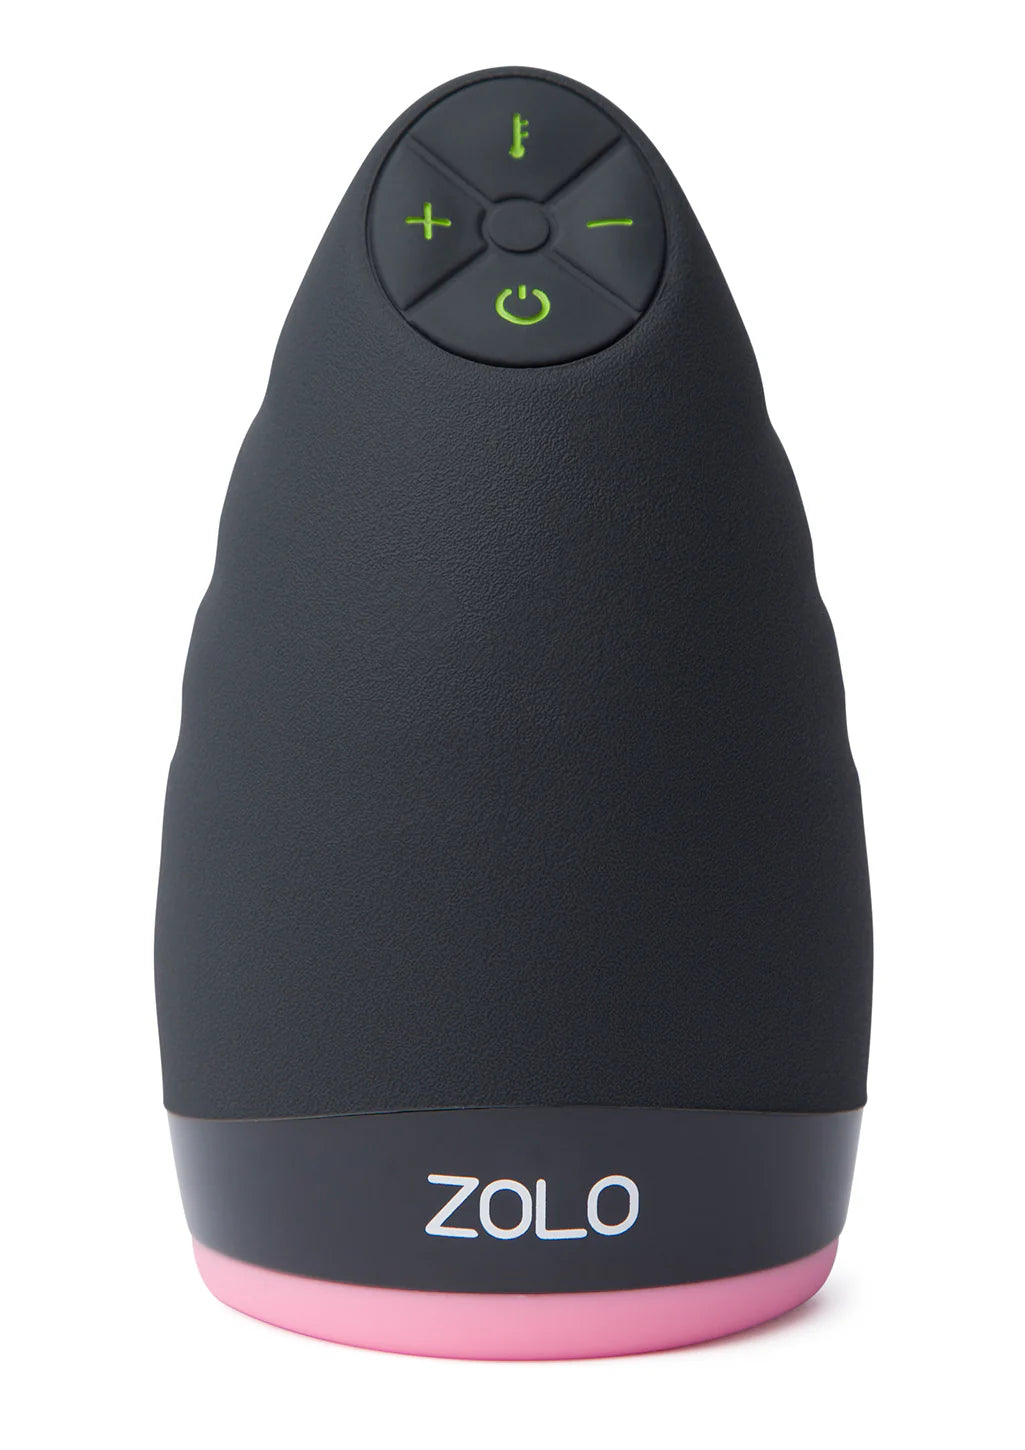 ZOLO Warming Dome Rechargeable Vibrating Masturbator